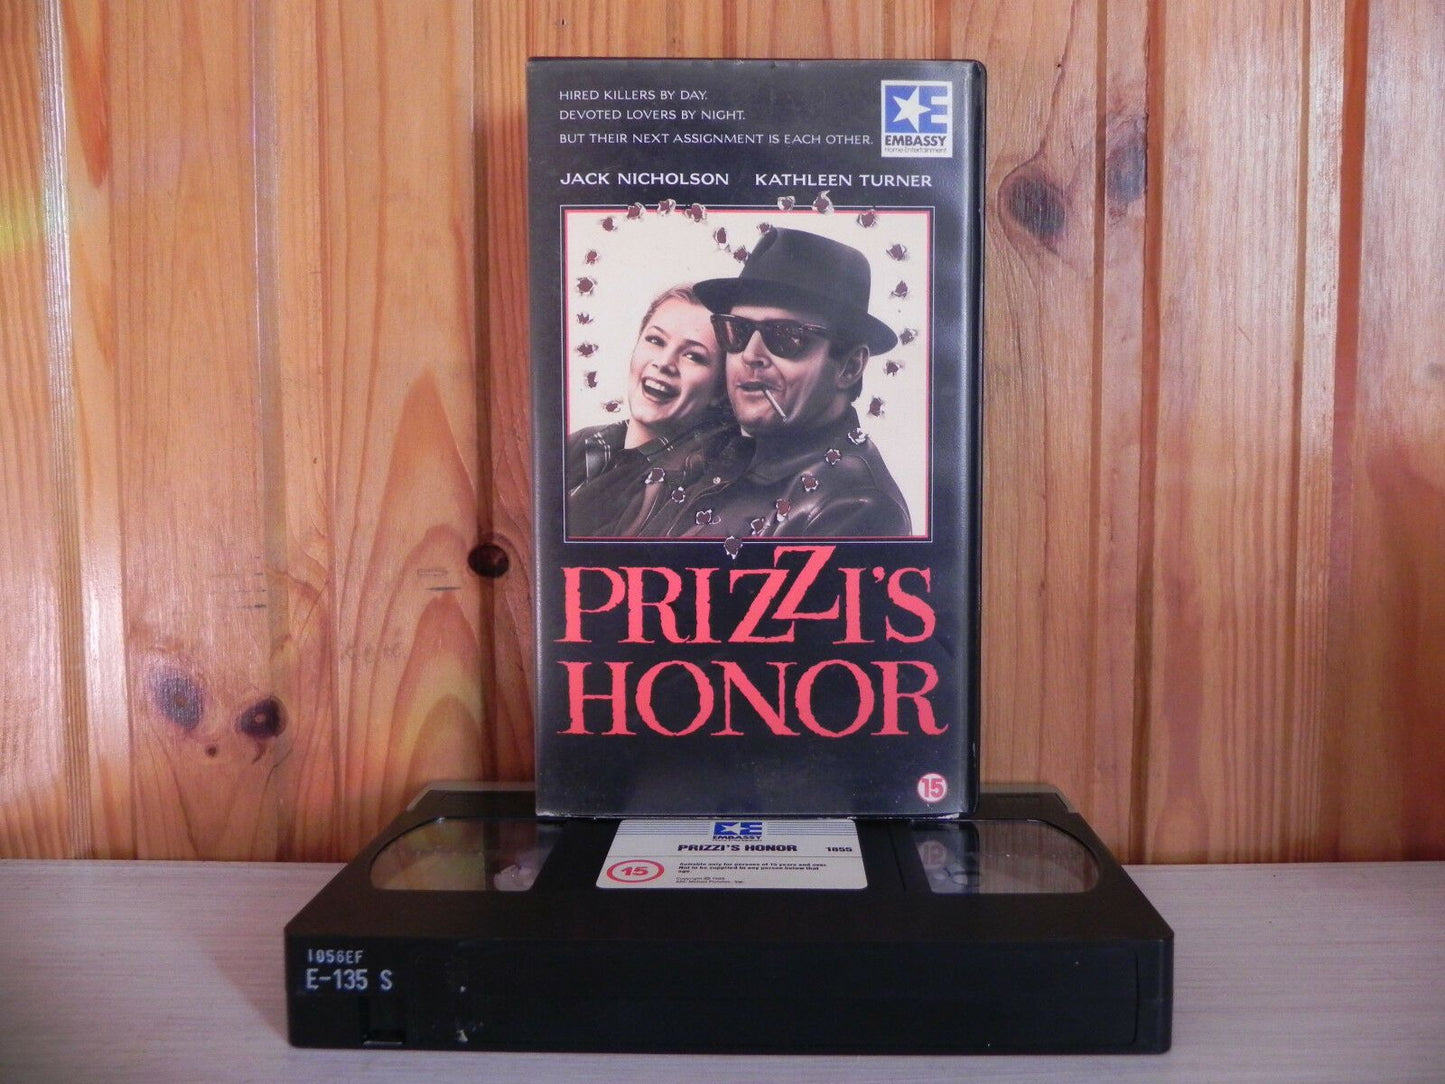 Prizzi's Honor - Jack Nicholson - Kathleen Turner - PreCert - Embassy 1855 - VHS-